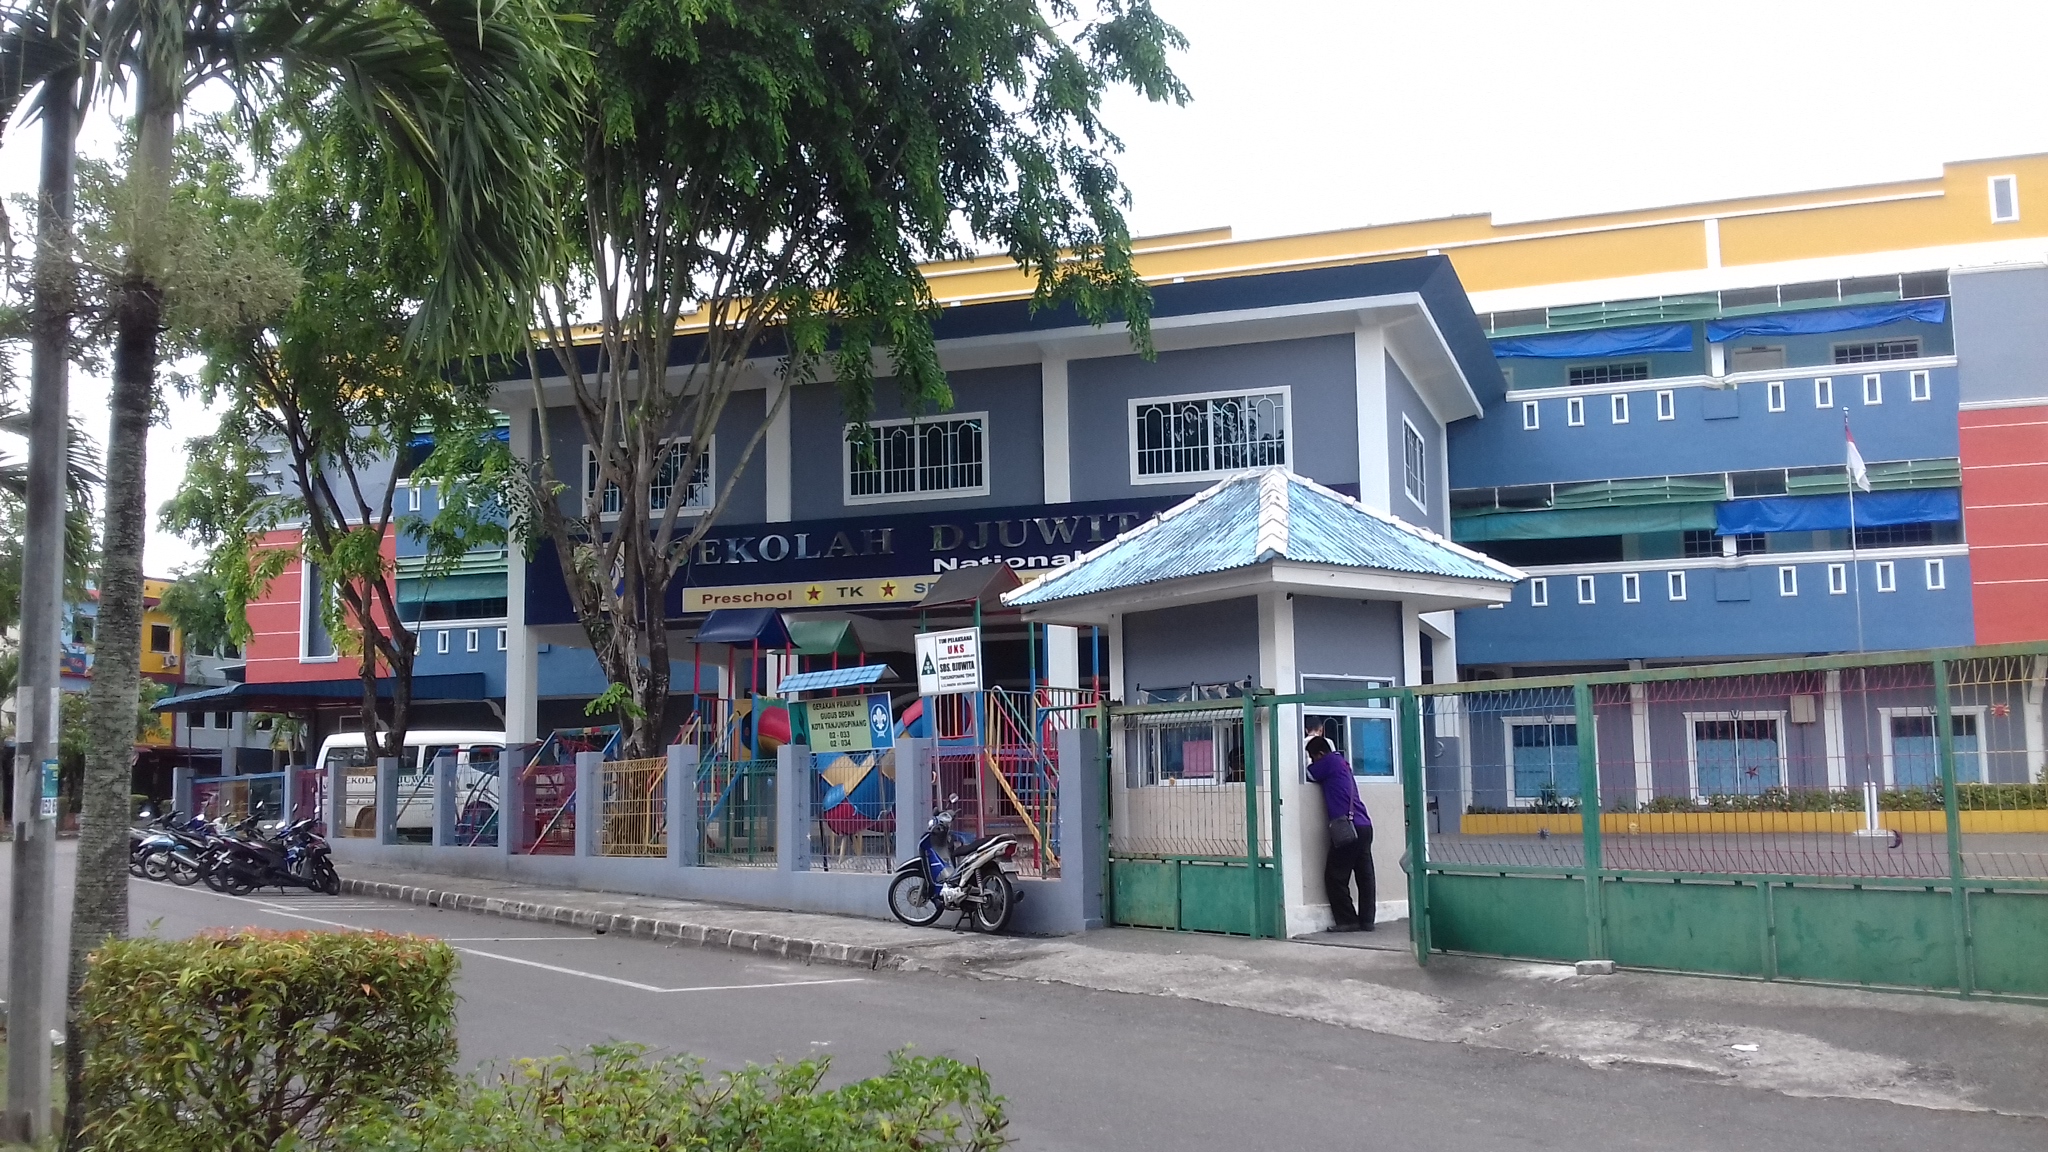 Foto SMP  Djuwita Tanjungpinang, Kota Tanjungpinang